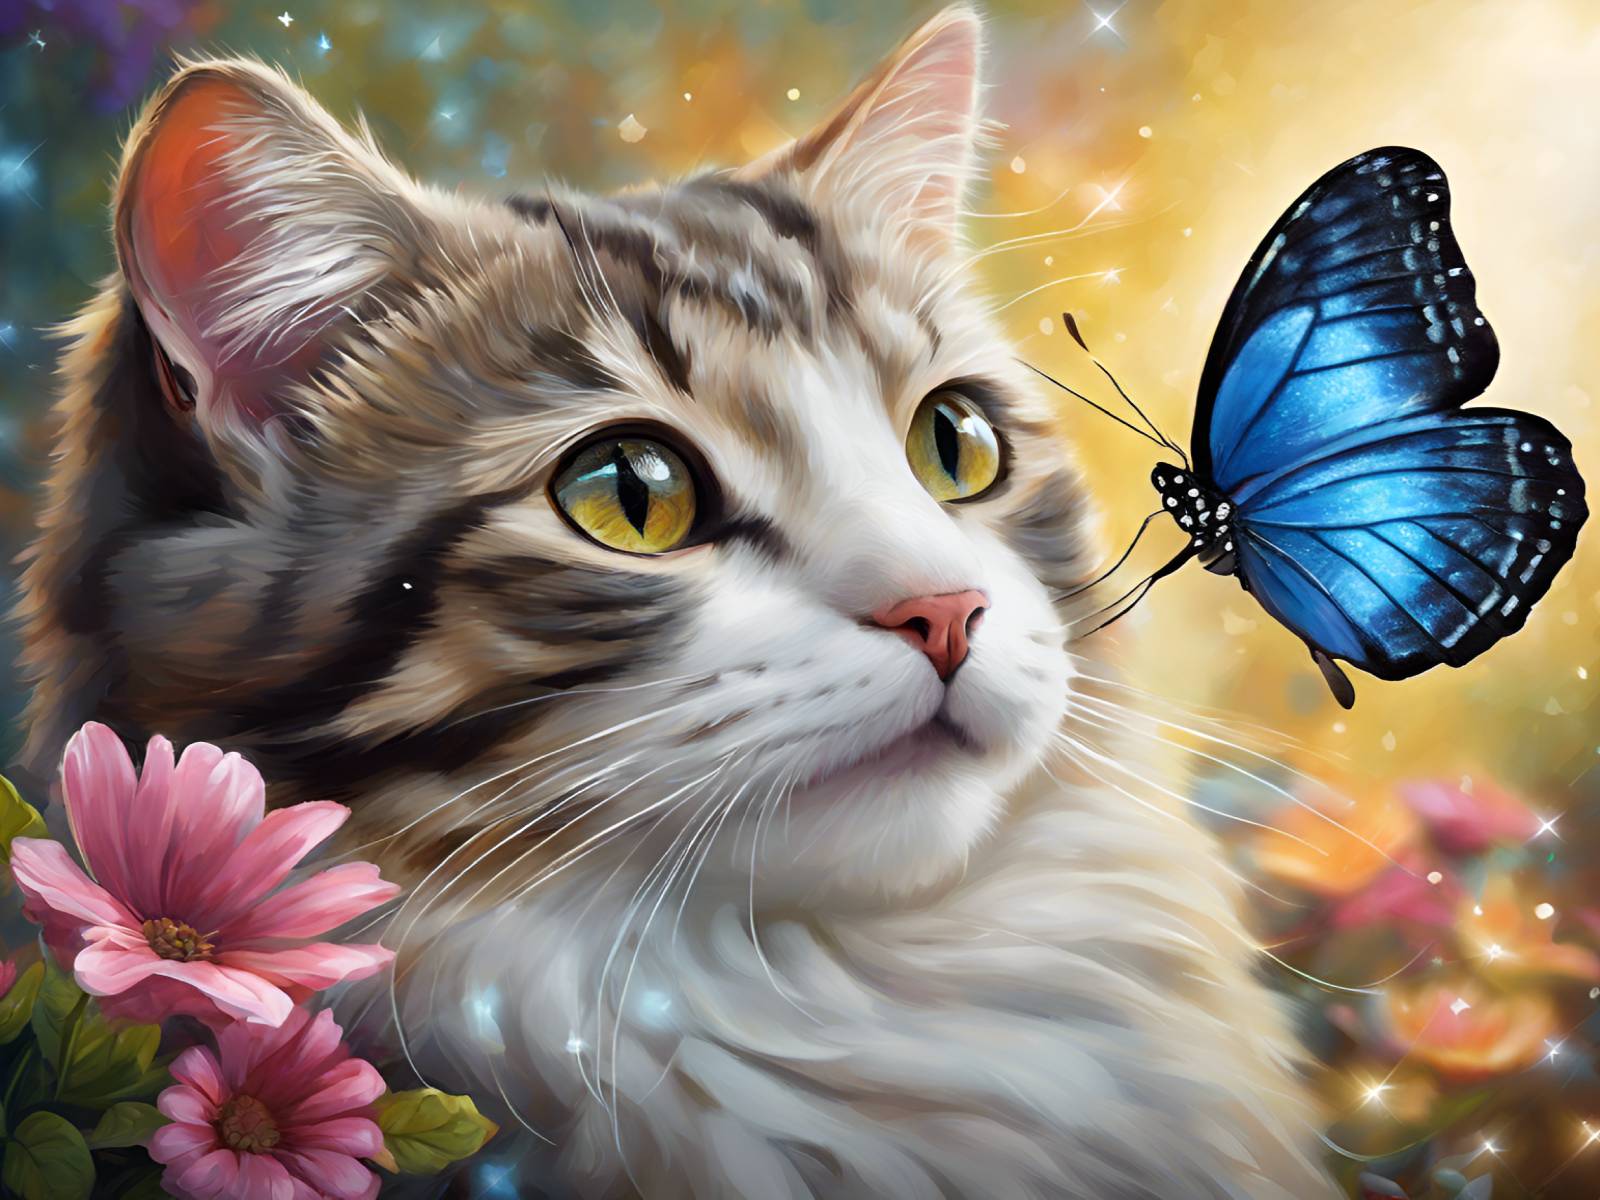 diamants-wizard-diamond-painting-kits-Animaux-Cat-Fluttering-Friendship-original.jpg